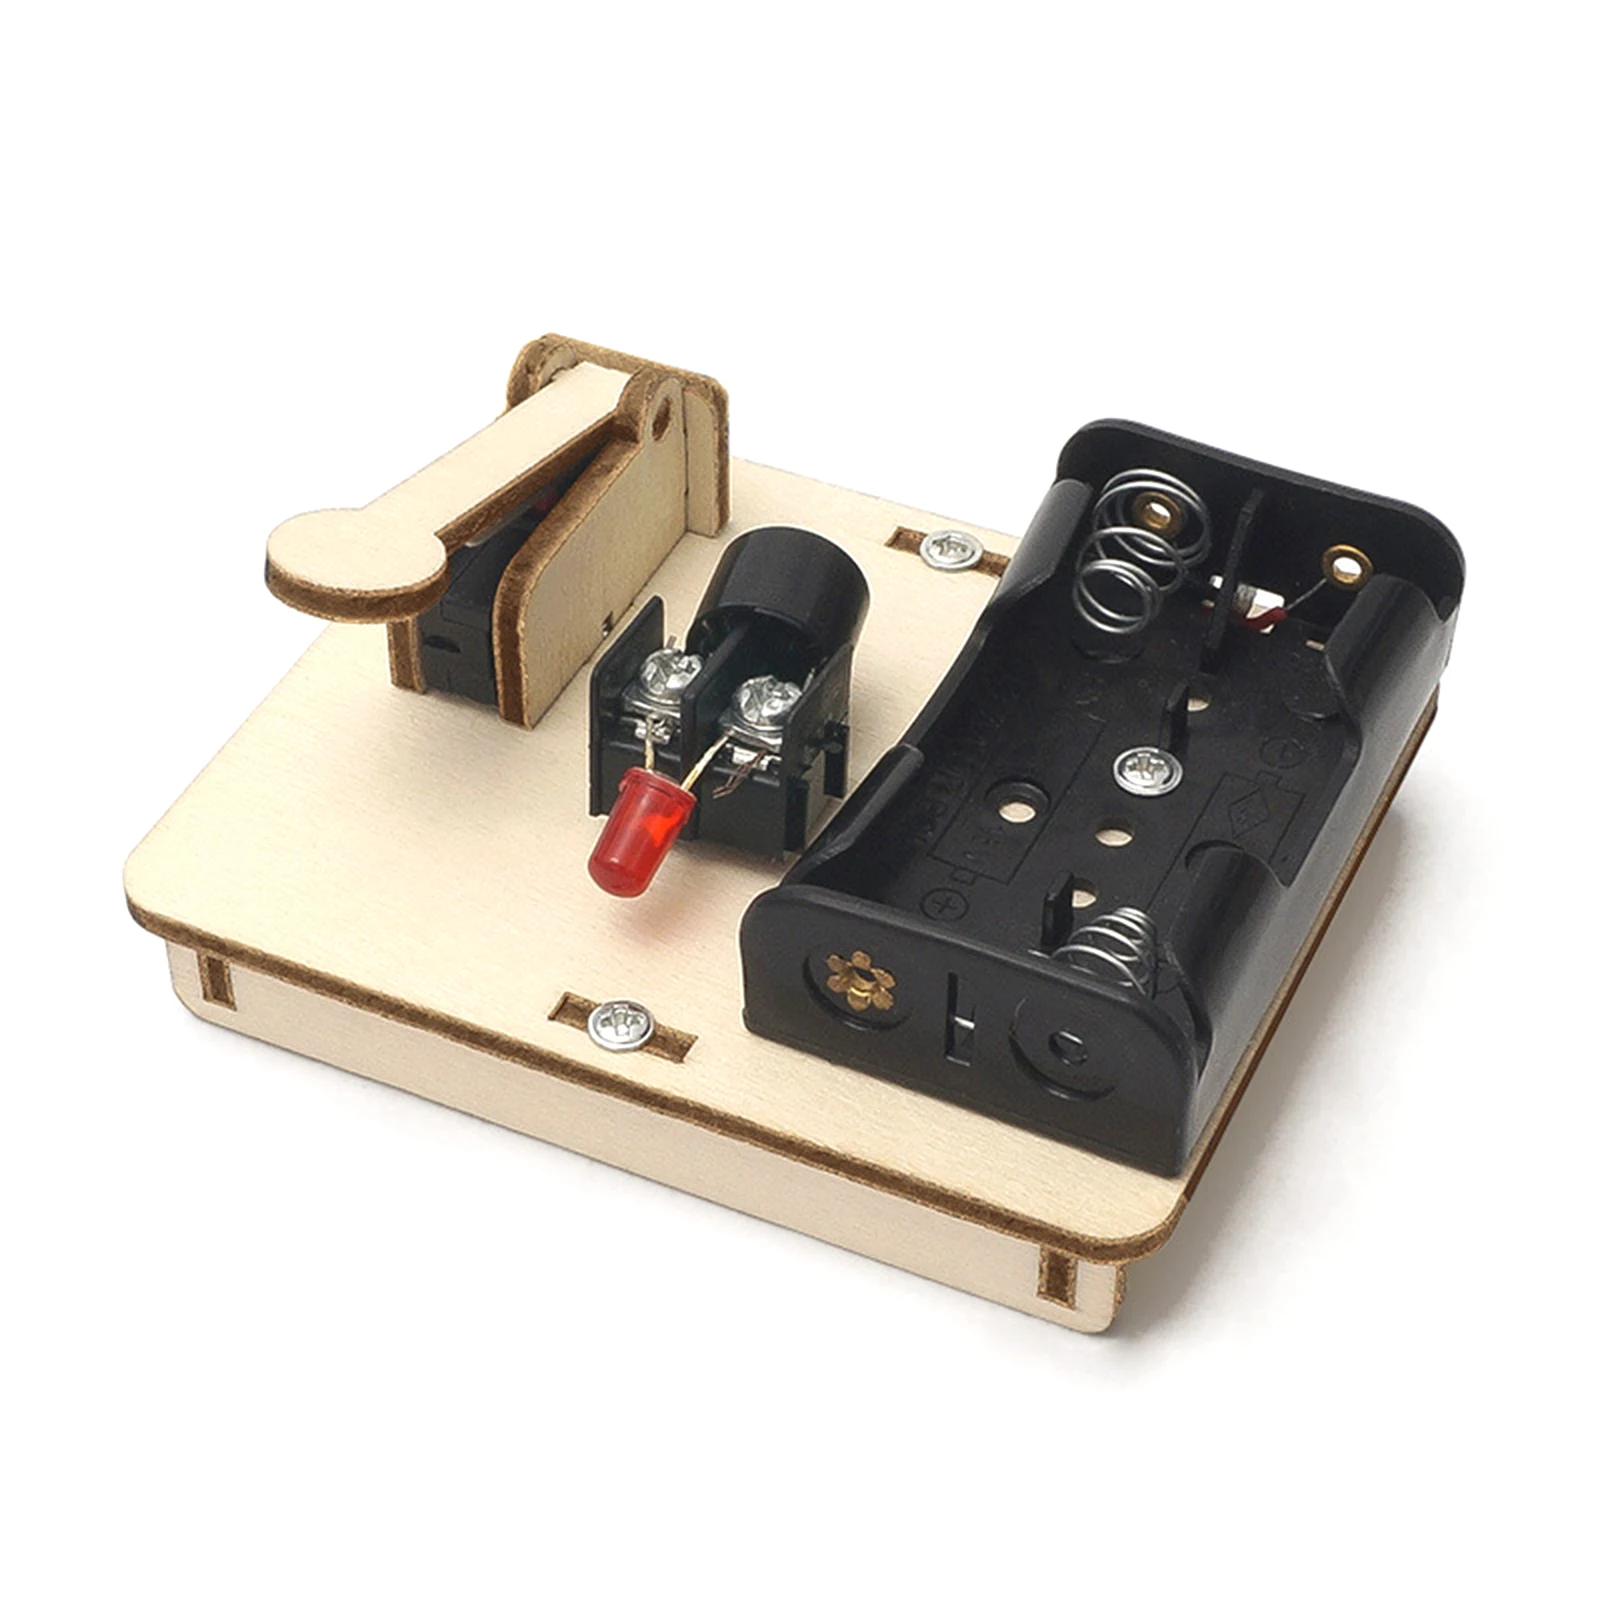 

3D Wooden Puzzle Telegraph Module DIY Toy Model Electrical Circuit Physics Scientific Experiment Materials Kit STEM Educational